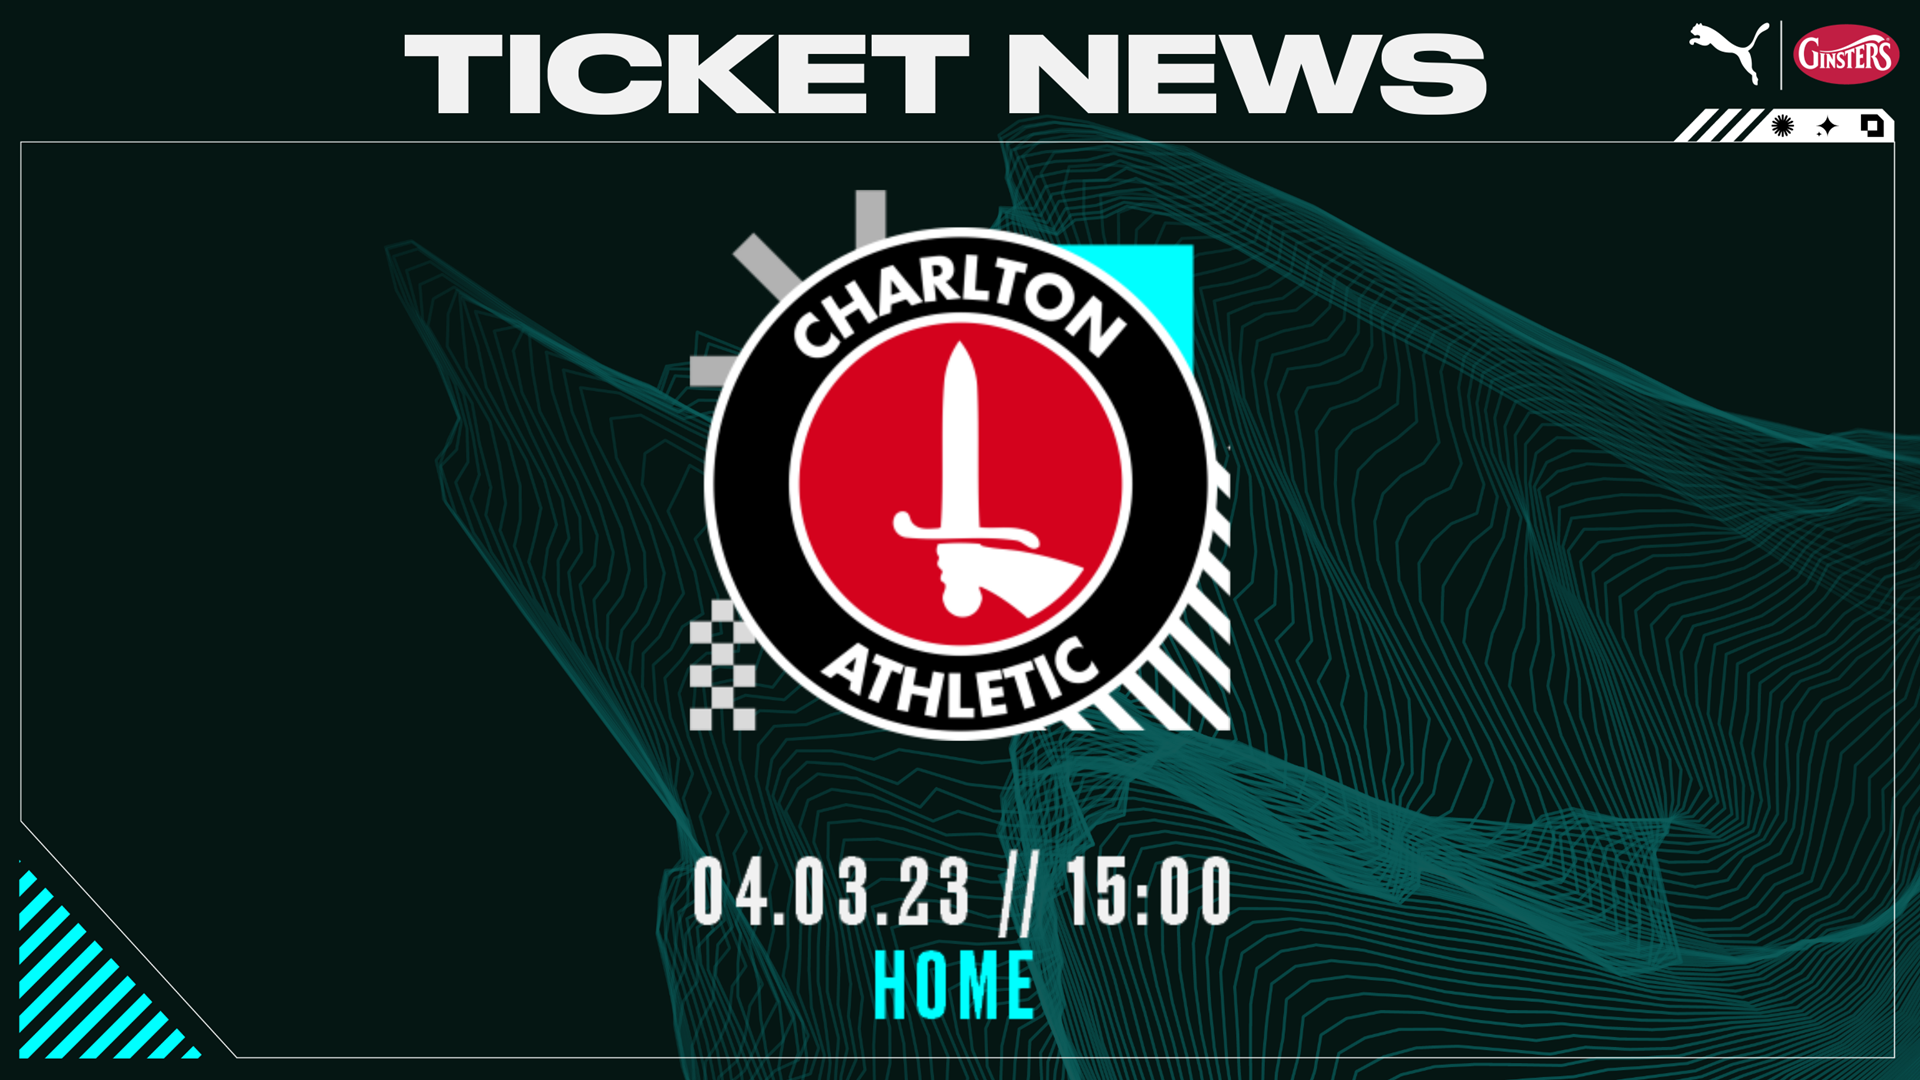 Charlton Tickets